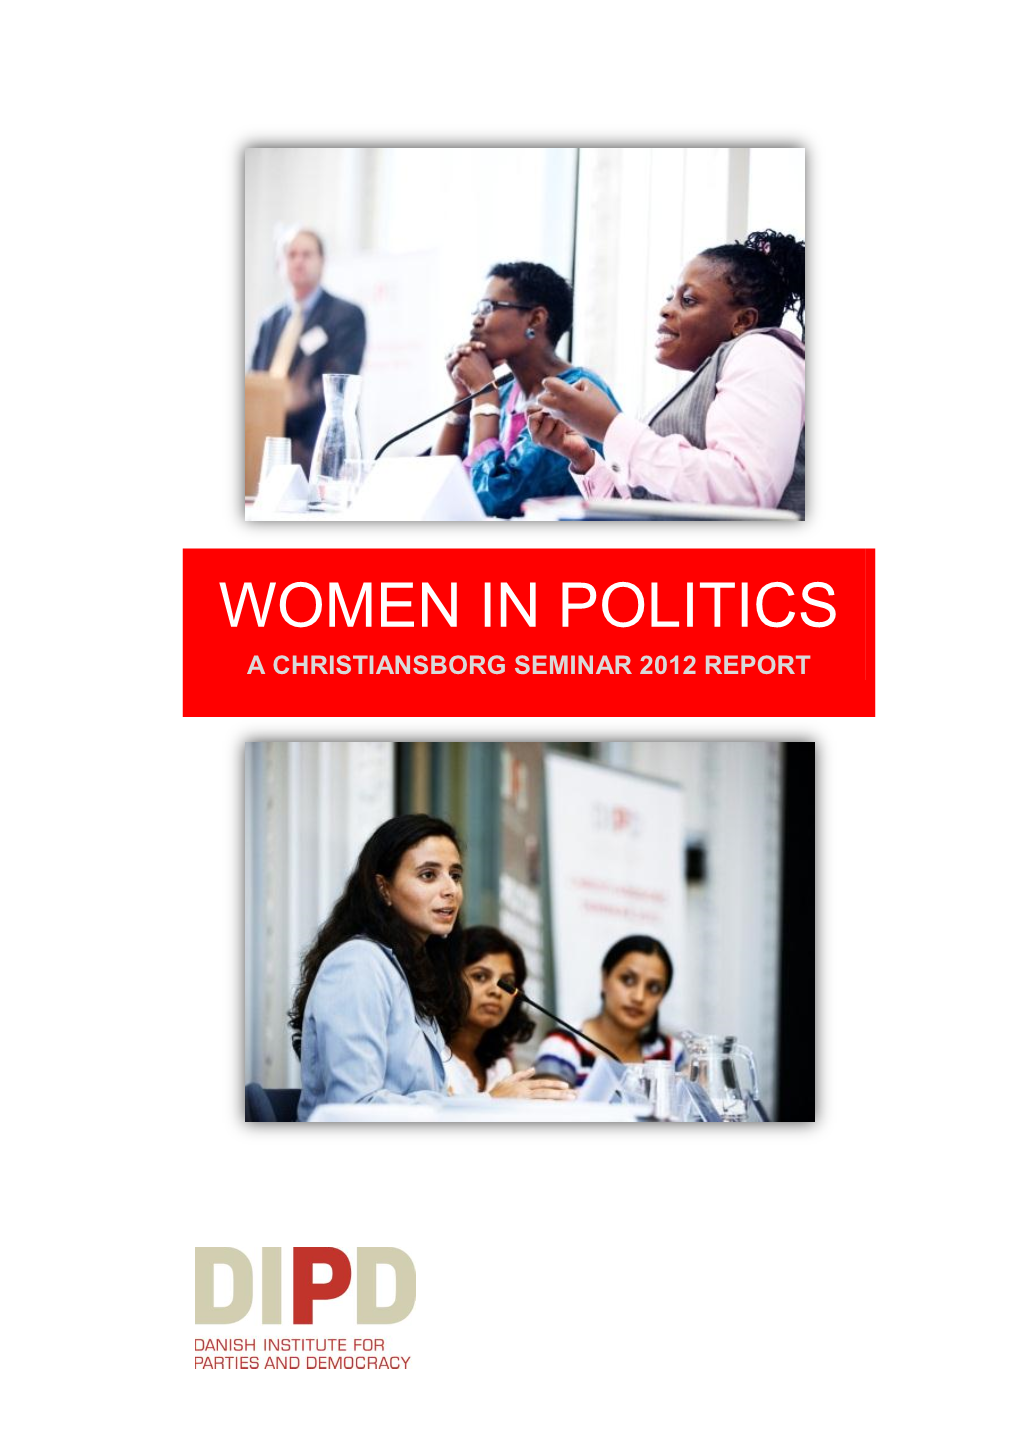 Women in Politics a Christiansborg Seminar 2012 Report